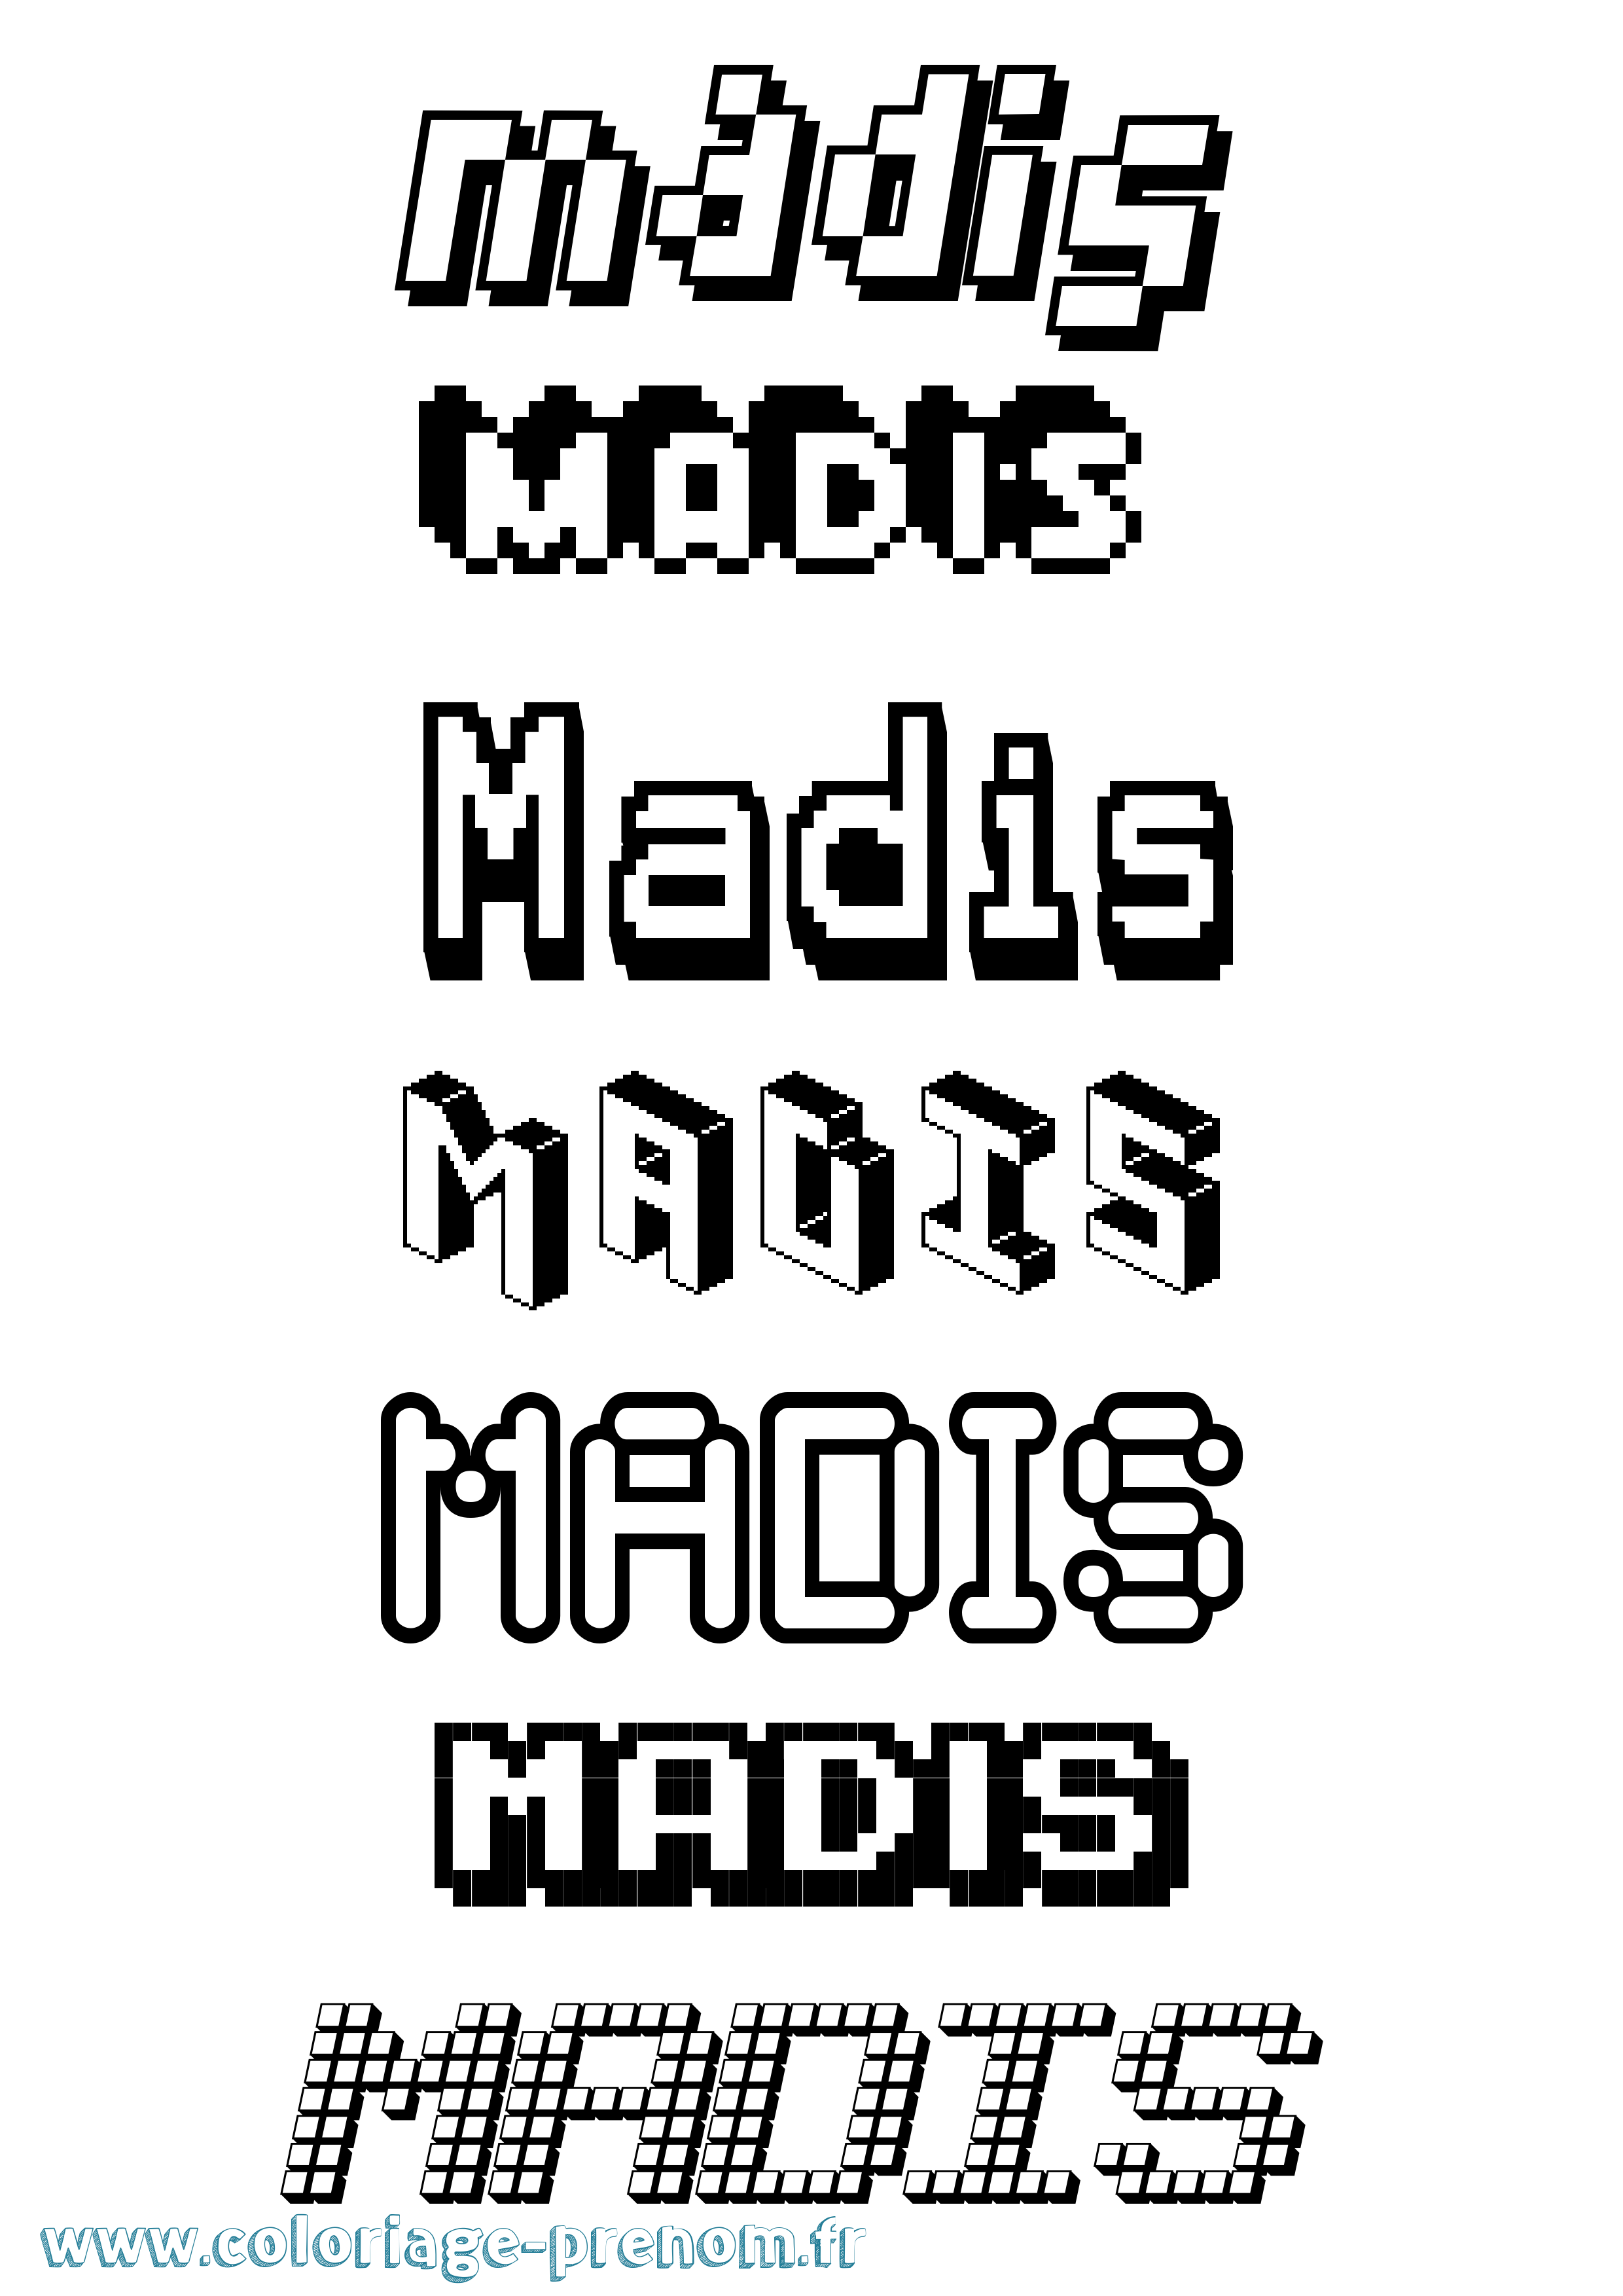 Coloriage prénom Madis Pixel